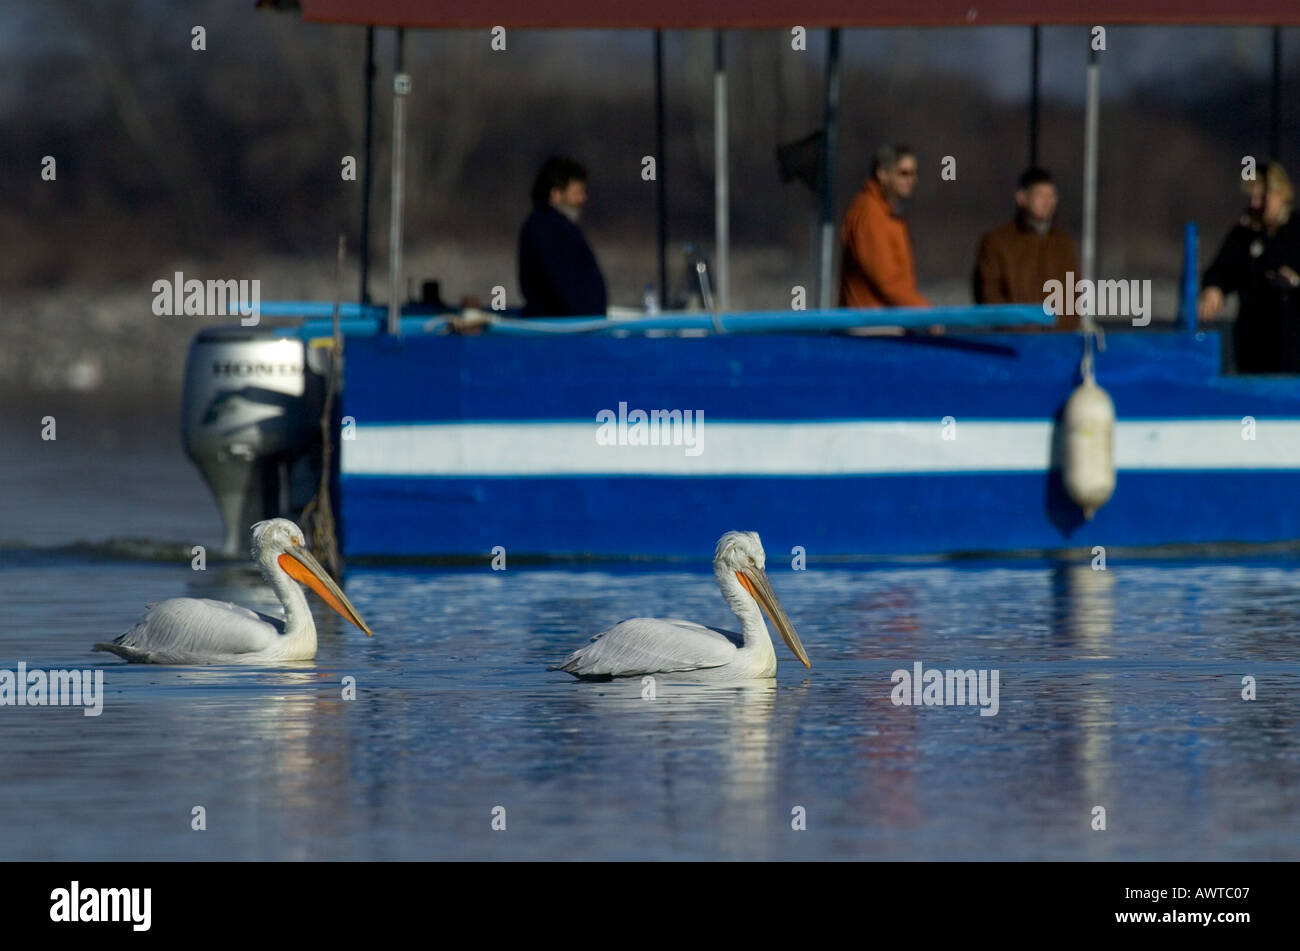 Dalmatinische Pelikan Pelicanus Crispus und Touristen auf Vogelbeobachtung tour See Kerkini Griechenland Januar Stockfoto